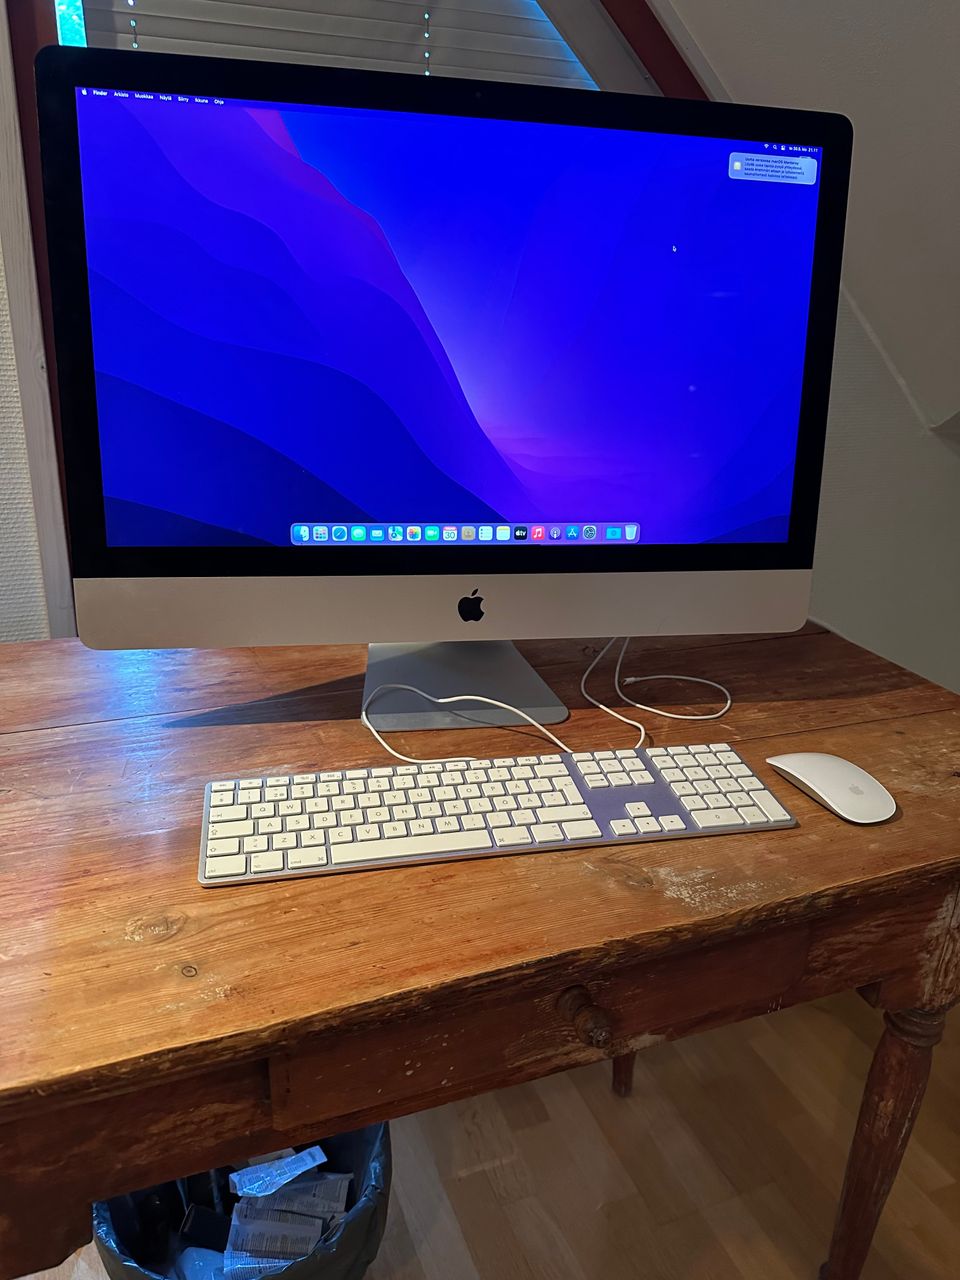 iMac 27" late 2015